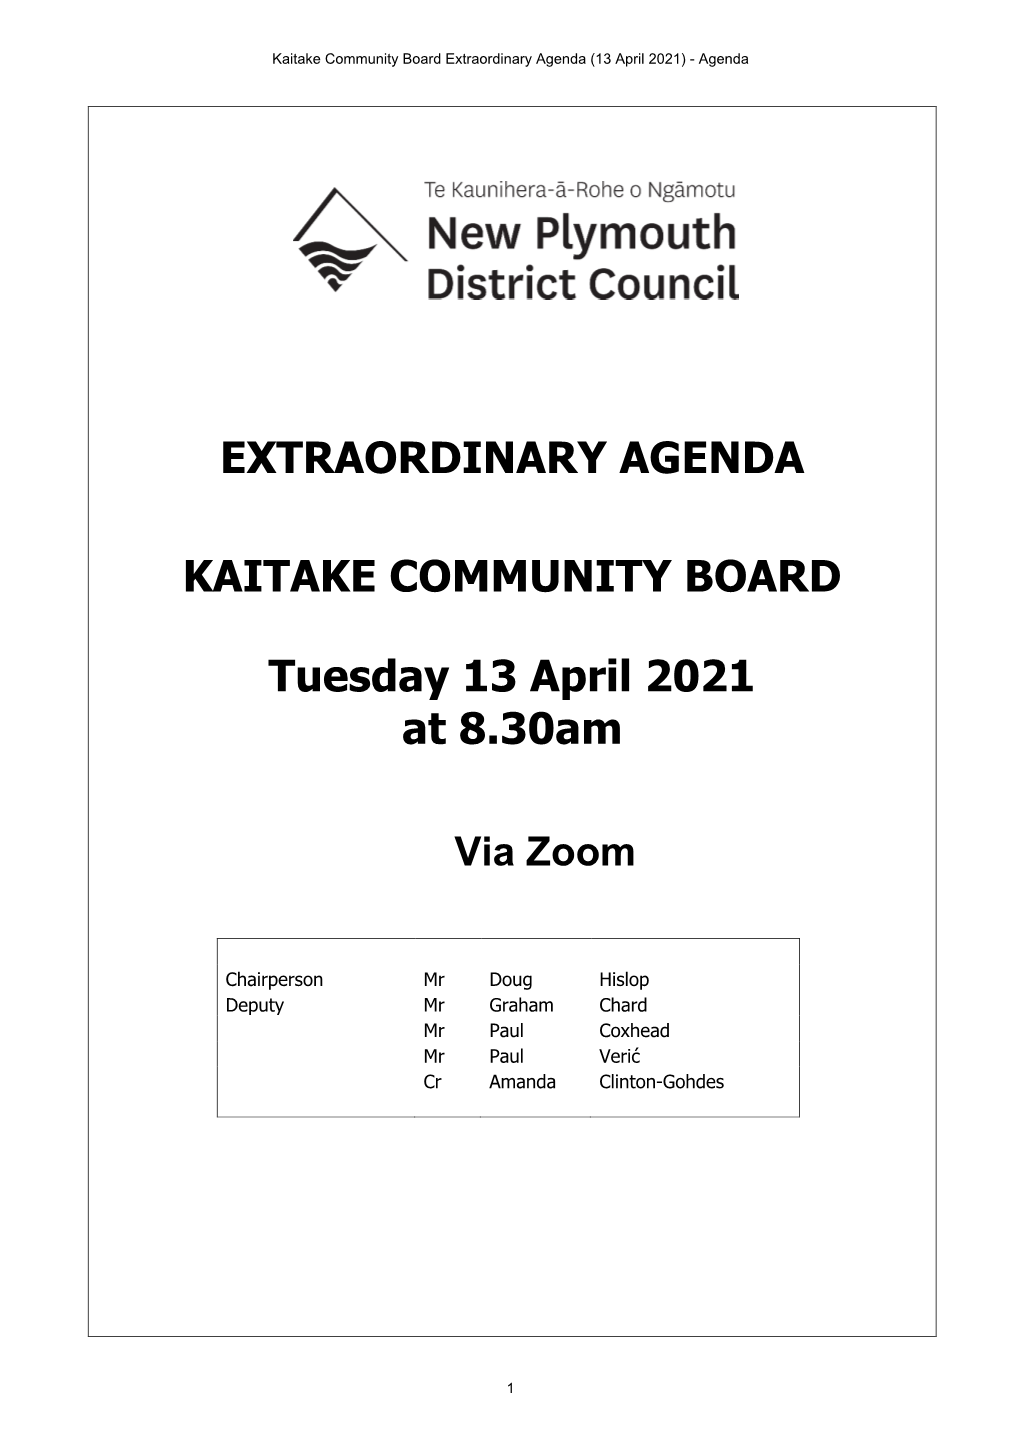 EXTRAORDINARY AGENDA KAITAKE COMMUNITY BOARD Tuesday 13 April 2021 at 8.30Am